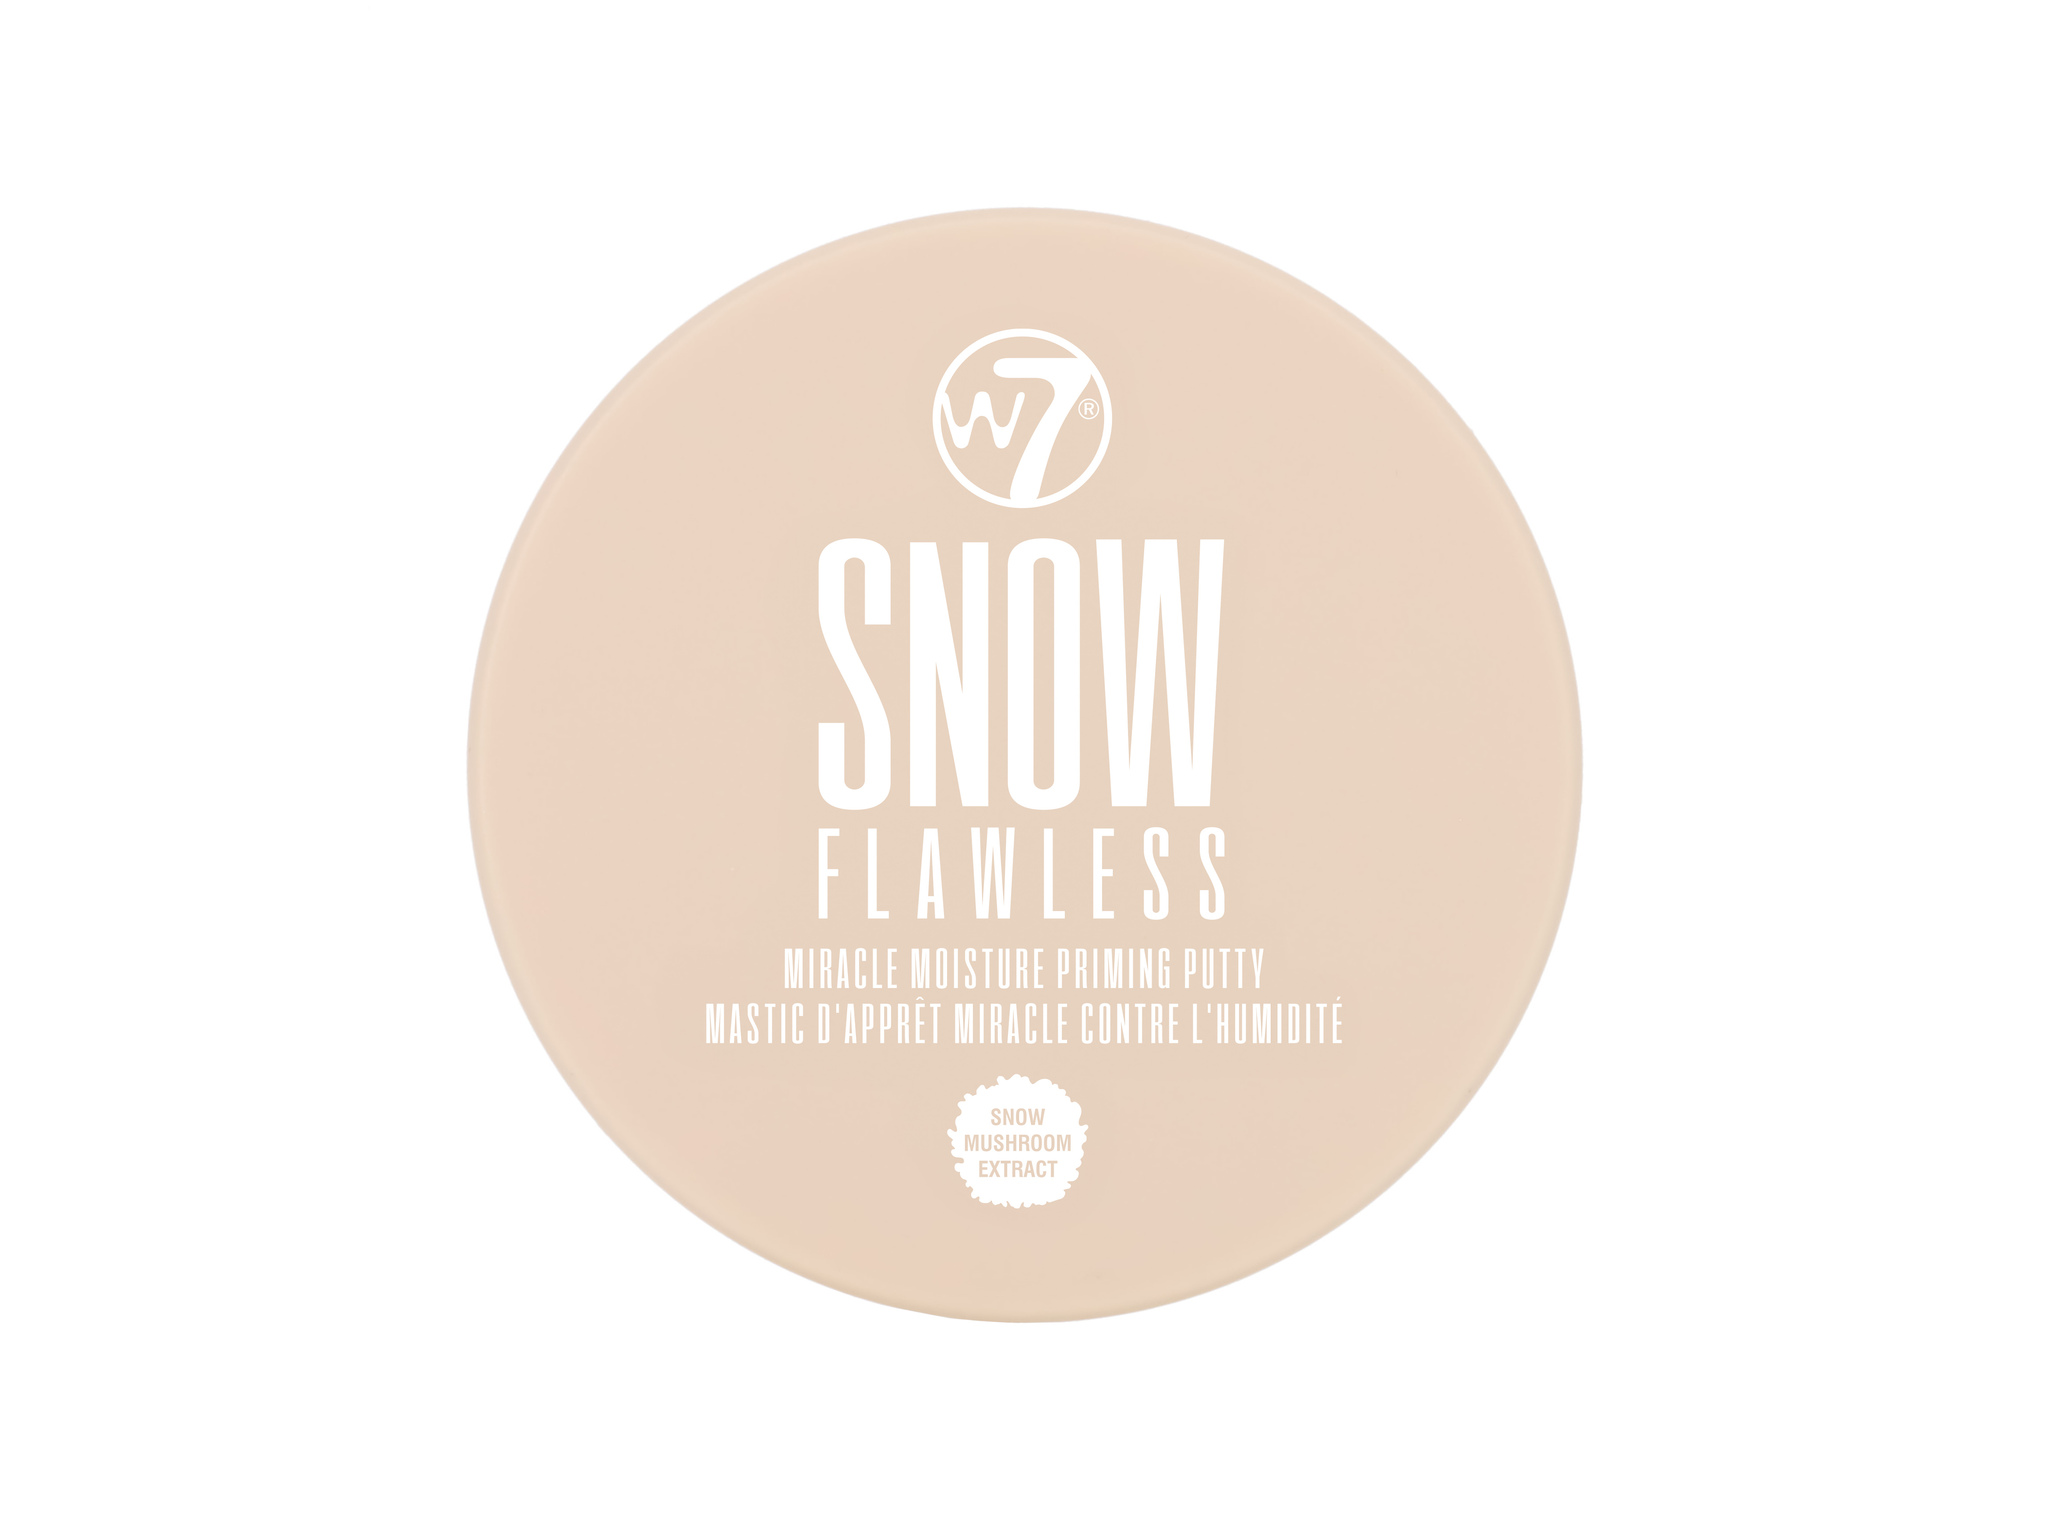 W7 SNOW FLAWLESS MiracleMoisture Priming Putty